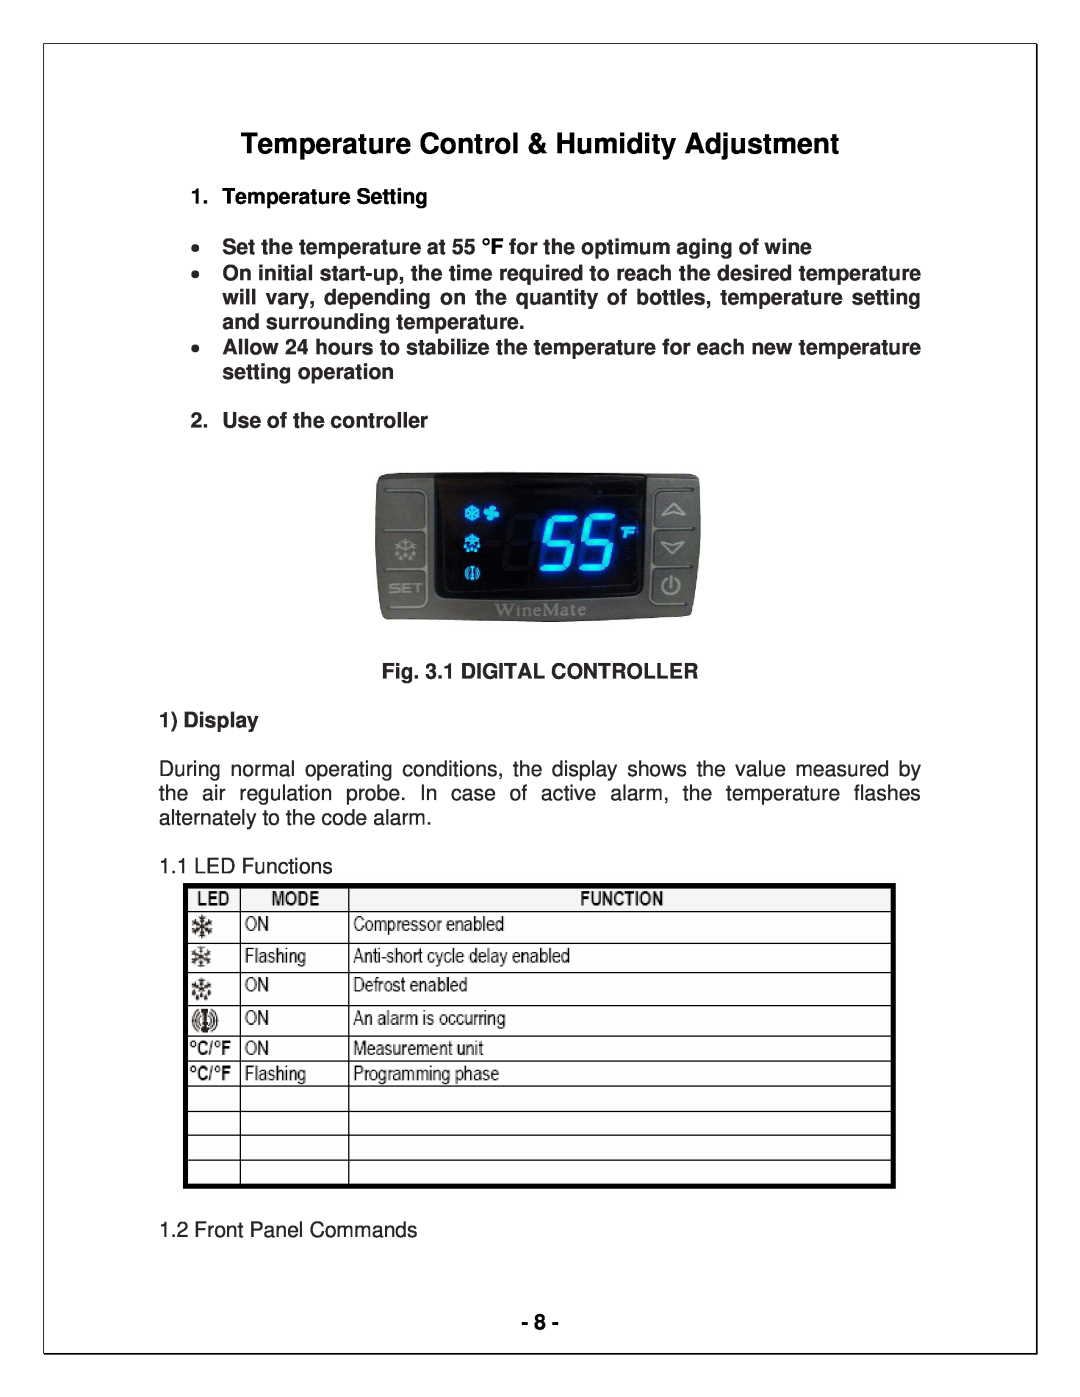 Vinotemp WM1500 HTD-TE, WM2500 HTD-TE manual Temperature Control & Humidity Adjustment, Temperature Setting 